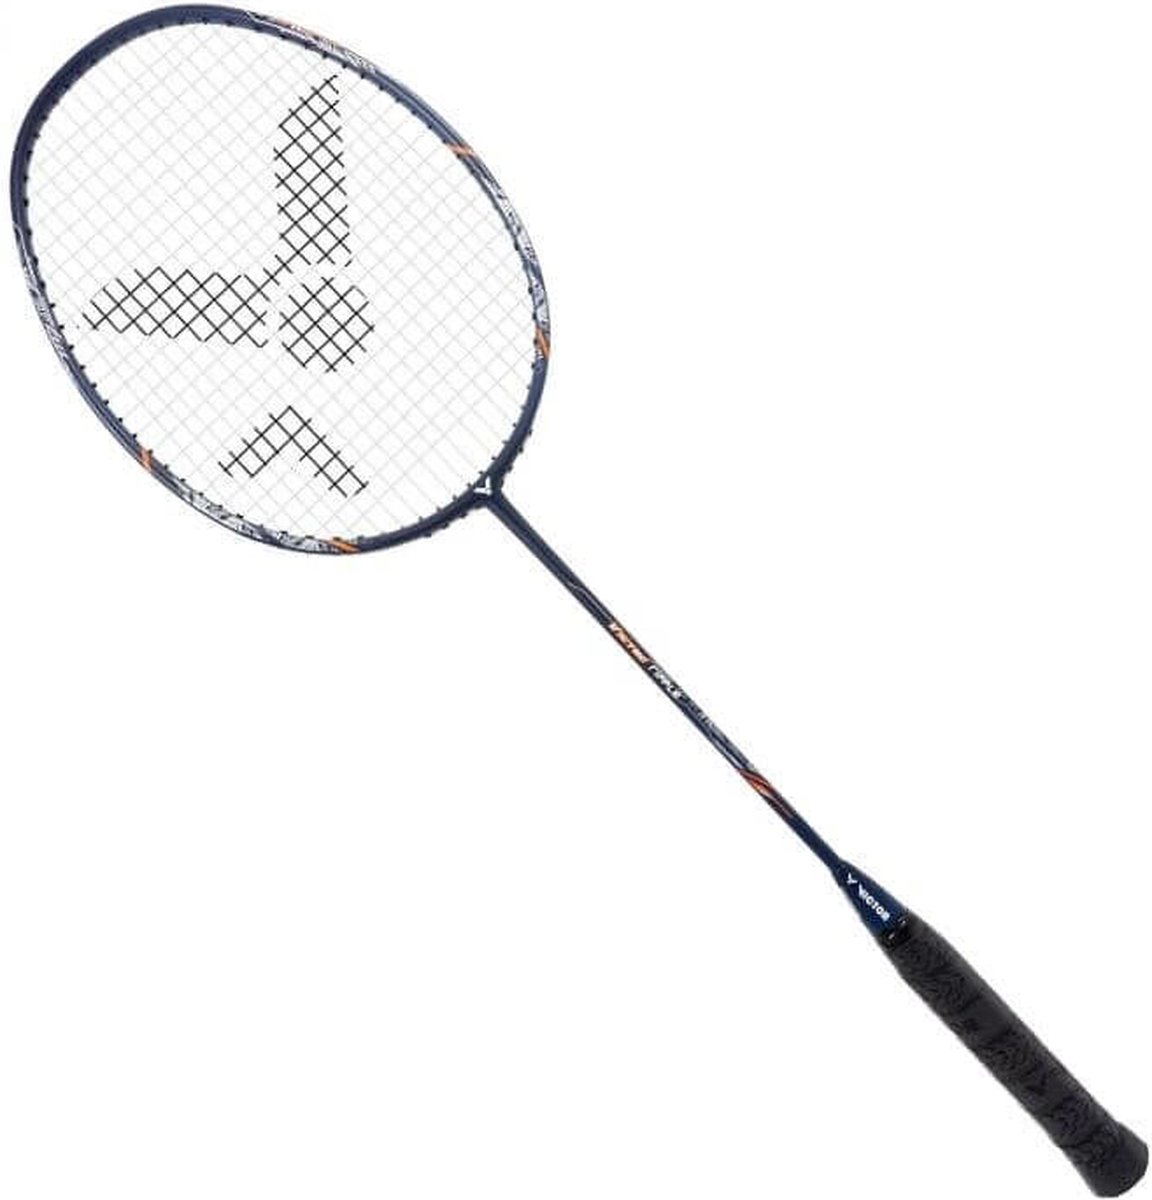 VICTOR Victec RIPPLE badmintonracket - snel spel